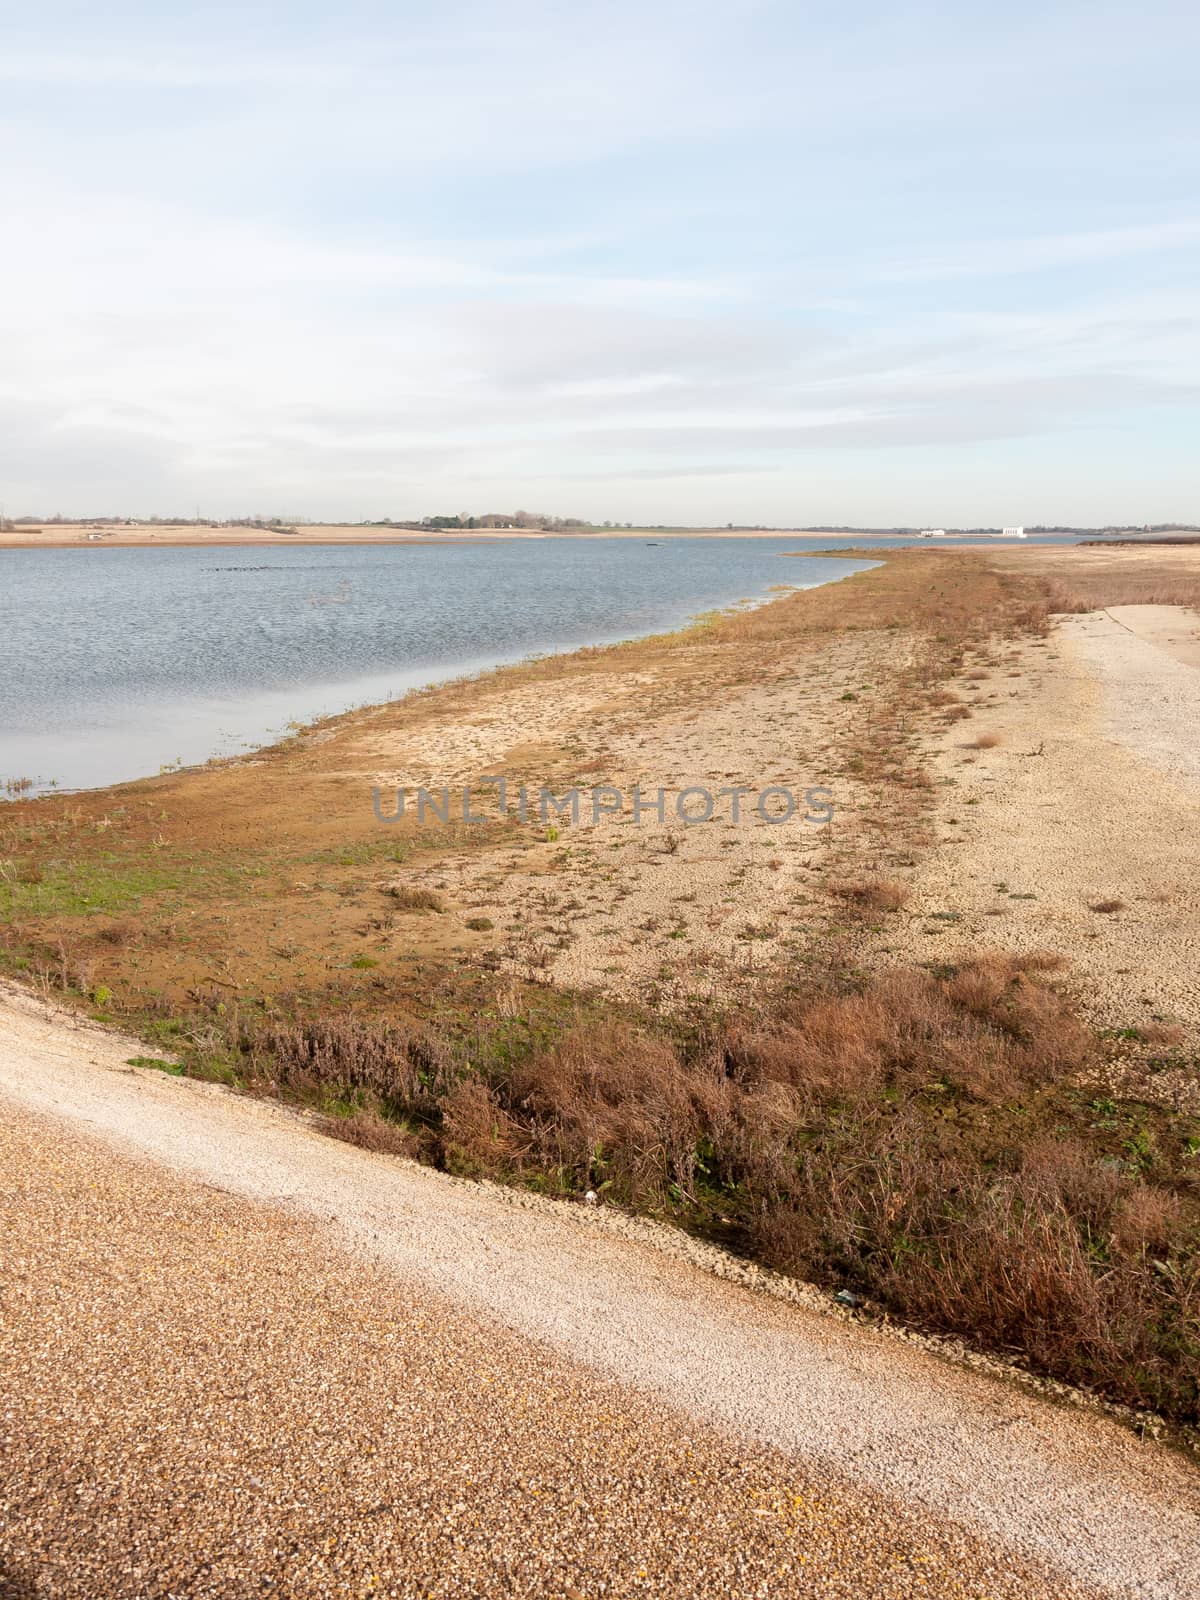 sandy beach texture dunes coast nature reserve plain background shingle; essex; england; uk